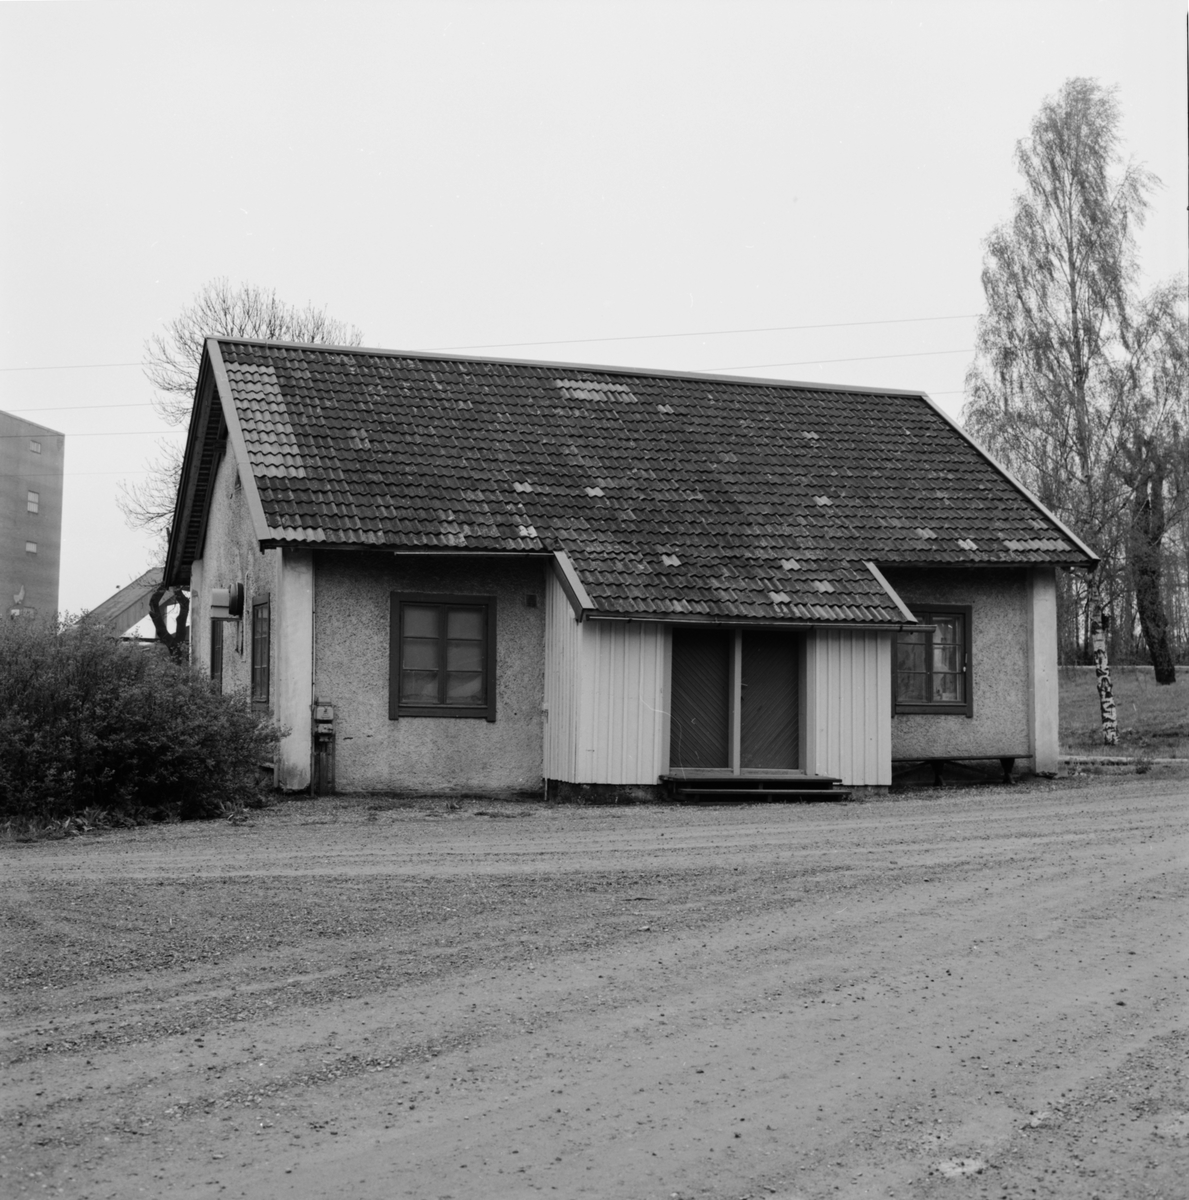 Snickeriverkstad, Dannemora Gruvor AB, Dannemora, Uppland maj 1991